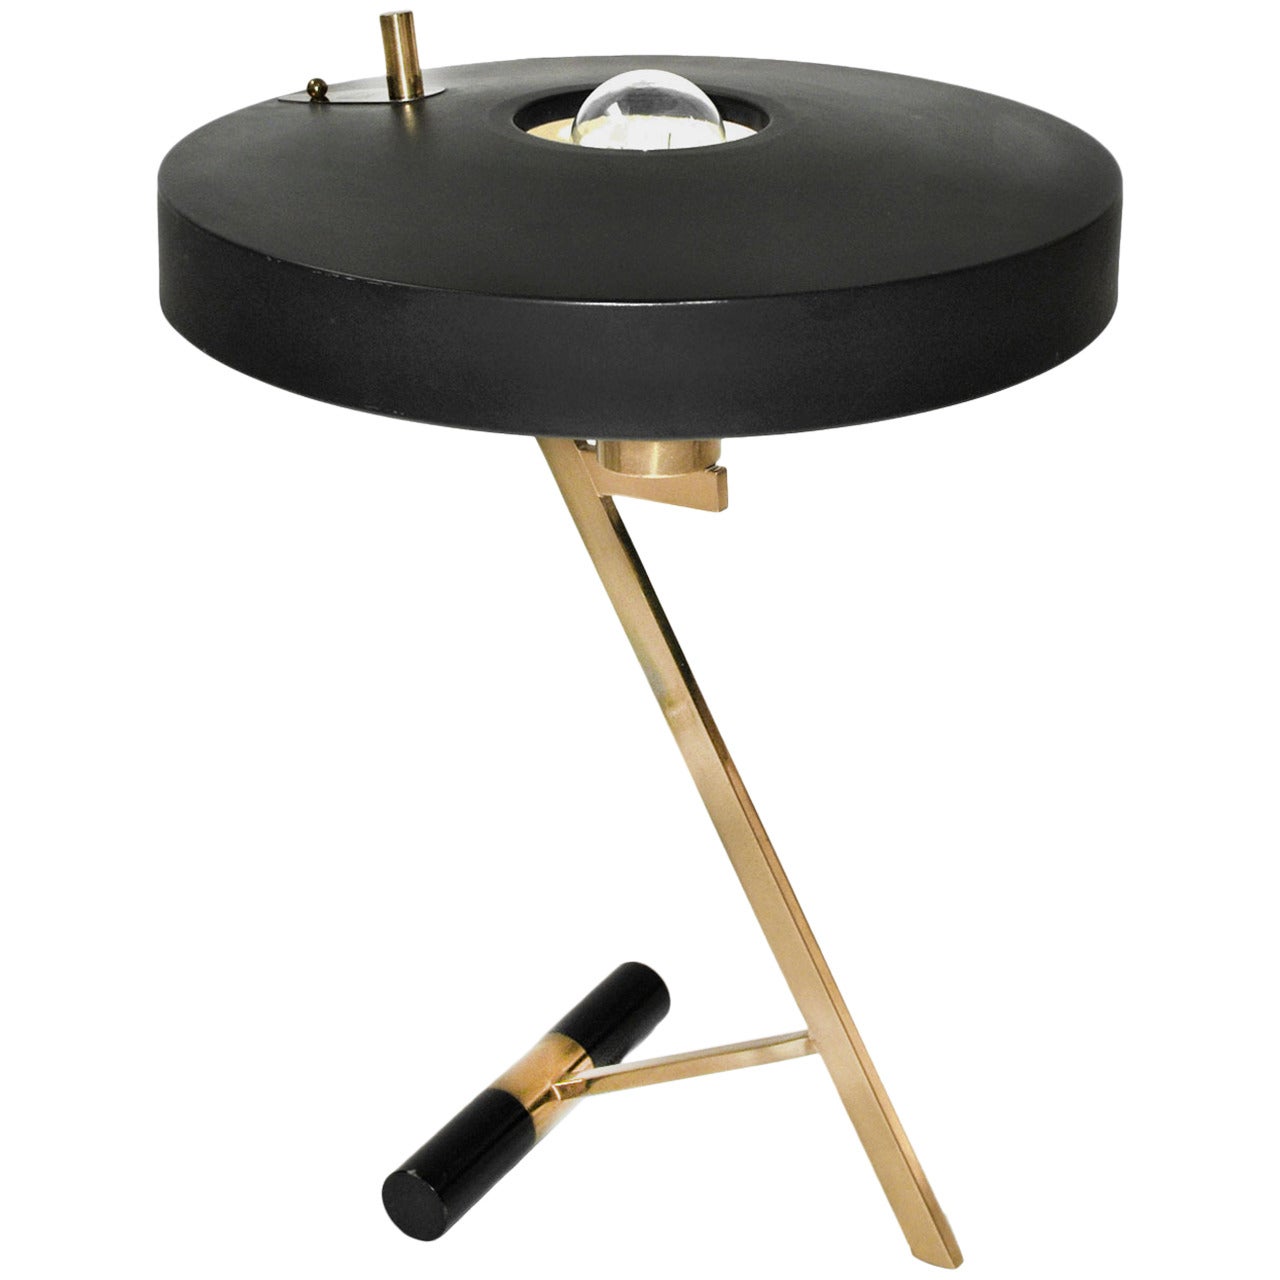 Table Lamp Model "Z" Designed by Louis Kalff for Phillips